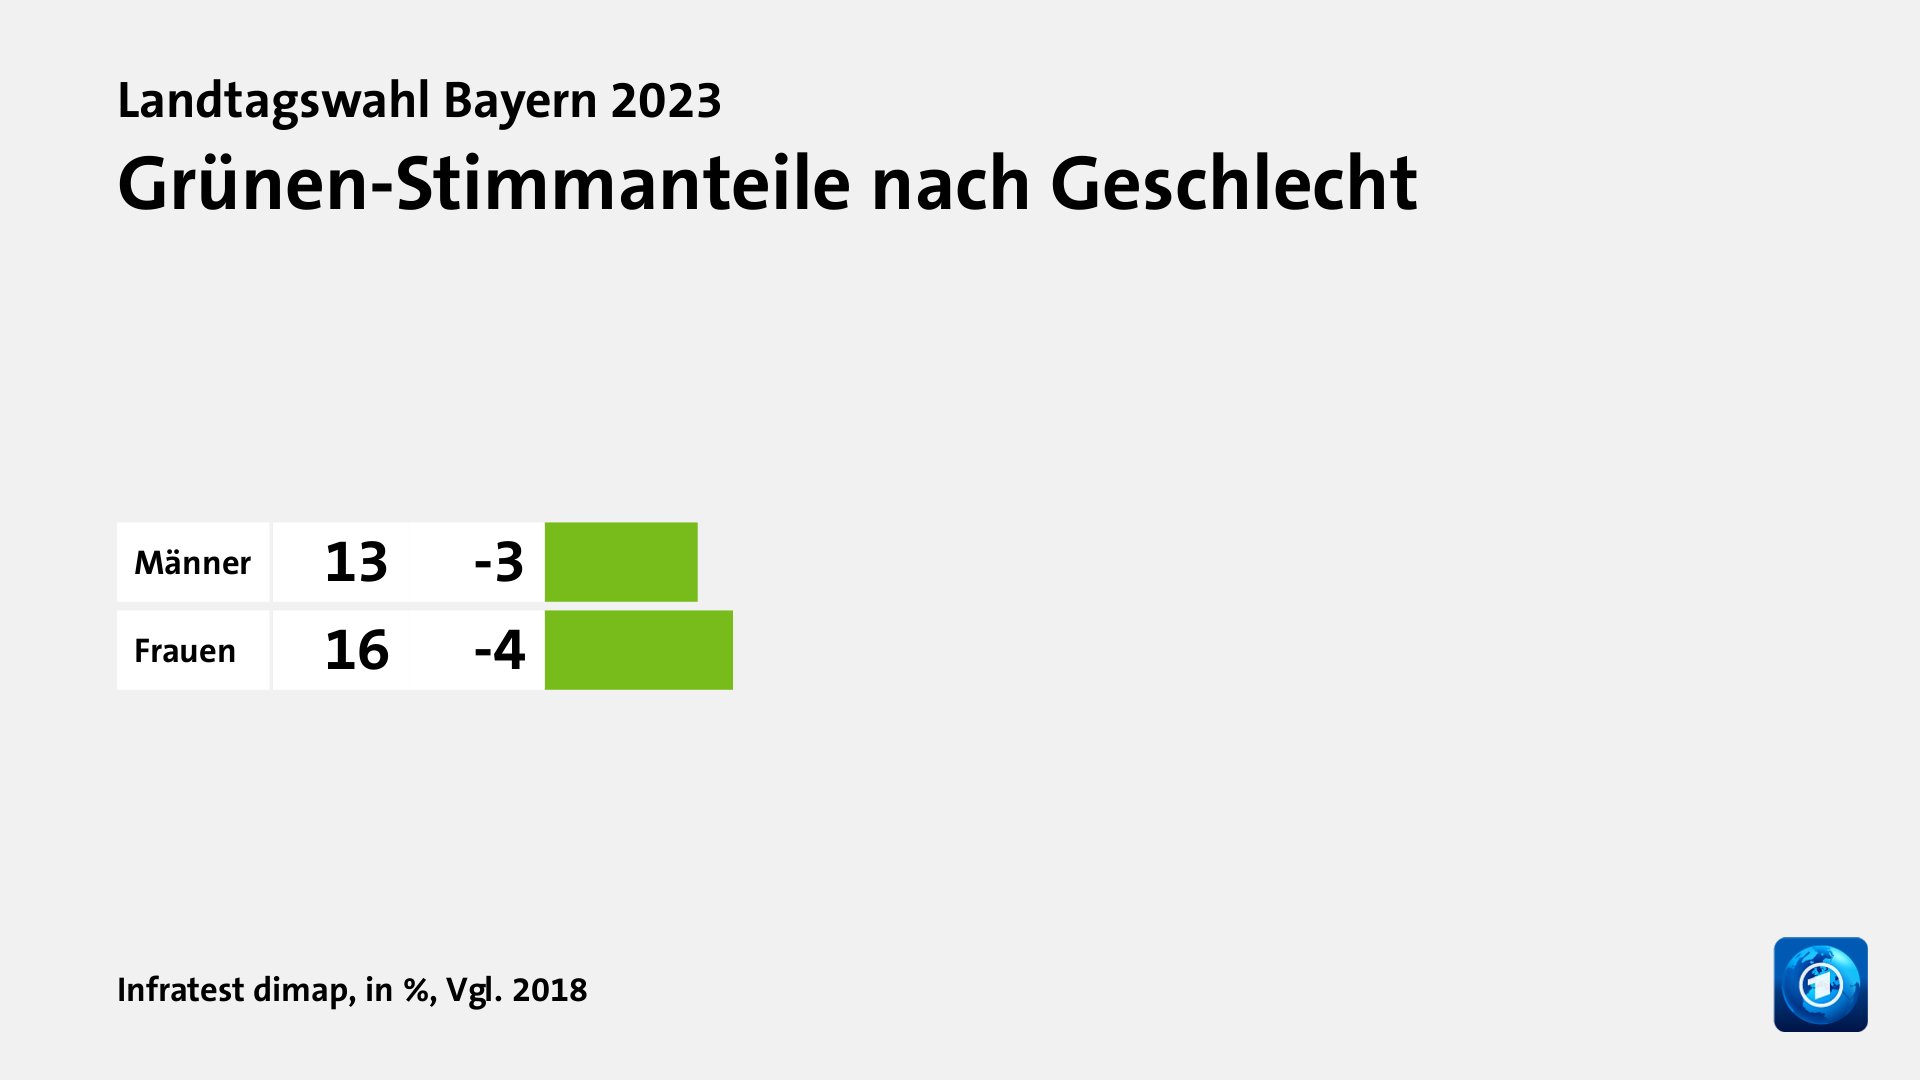 Grünen-Stimmanteile nach Geschlecht, in %, Vgl. 2018: Männer 13, Frauen 16, Quelle: Infratest dimap